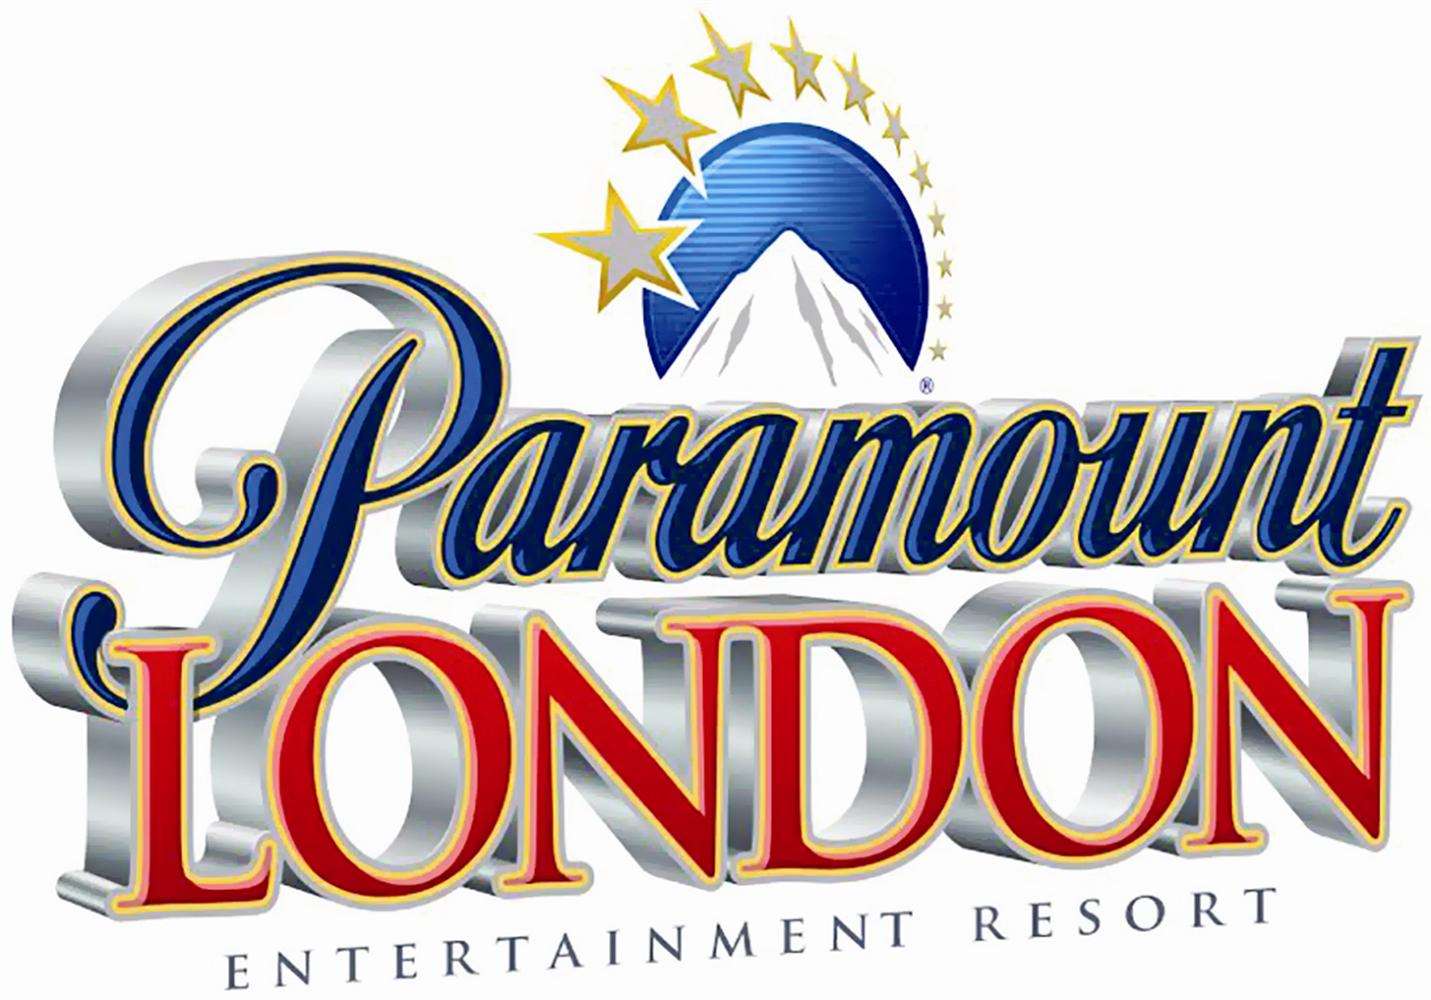 The new logo for London Paramount Entertainment Resort